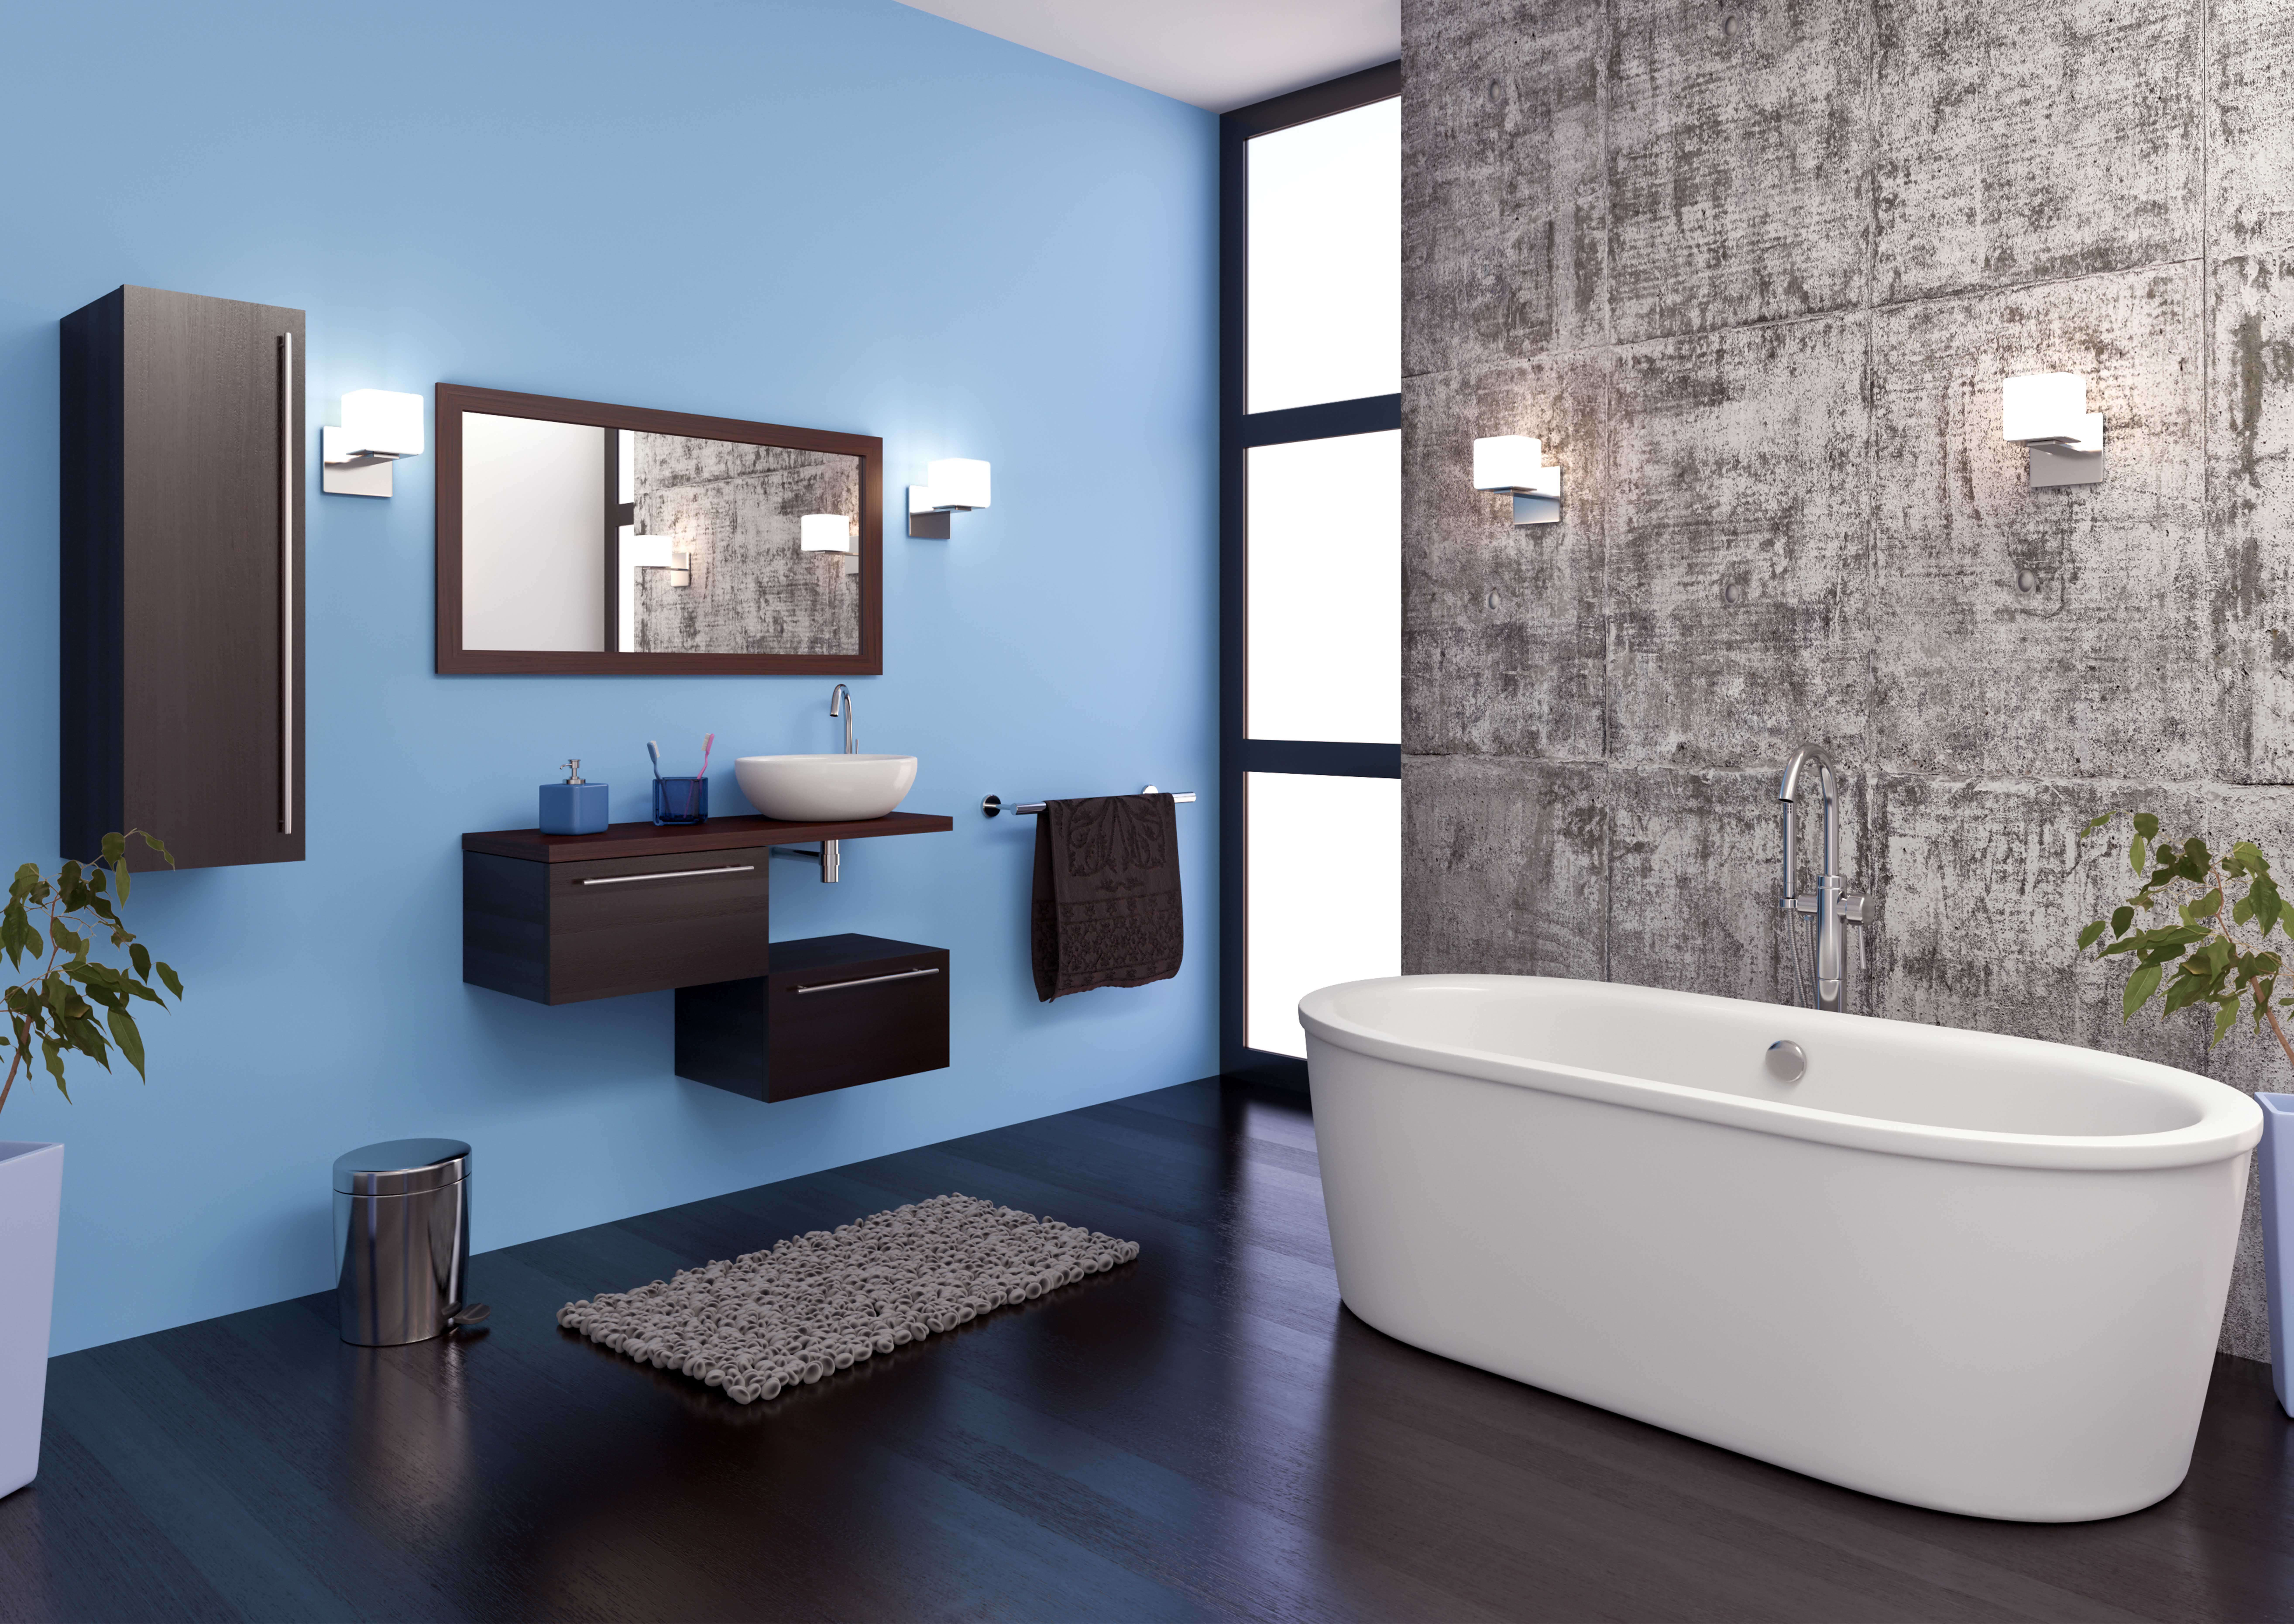 Top luxury bathroom design ideas